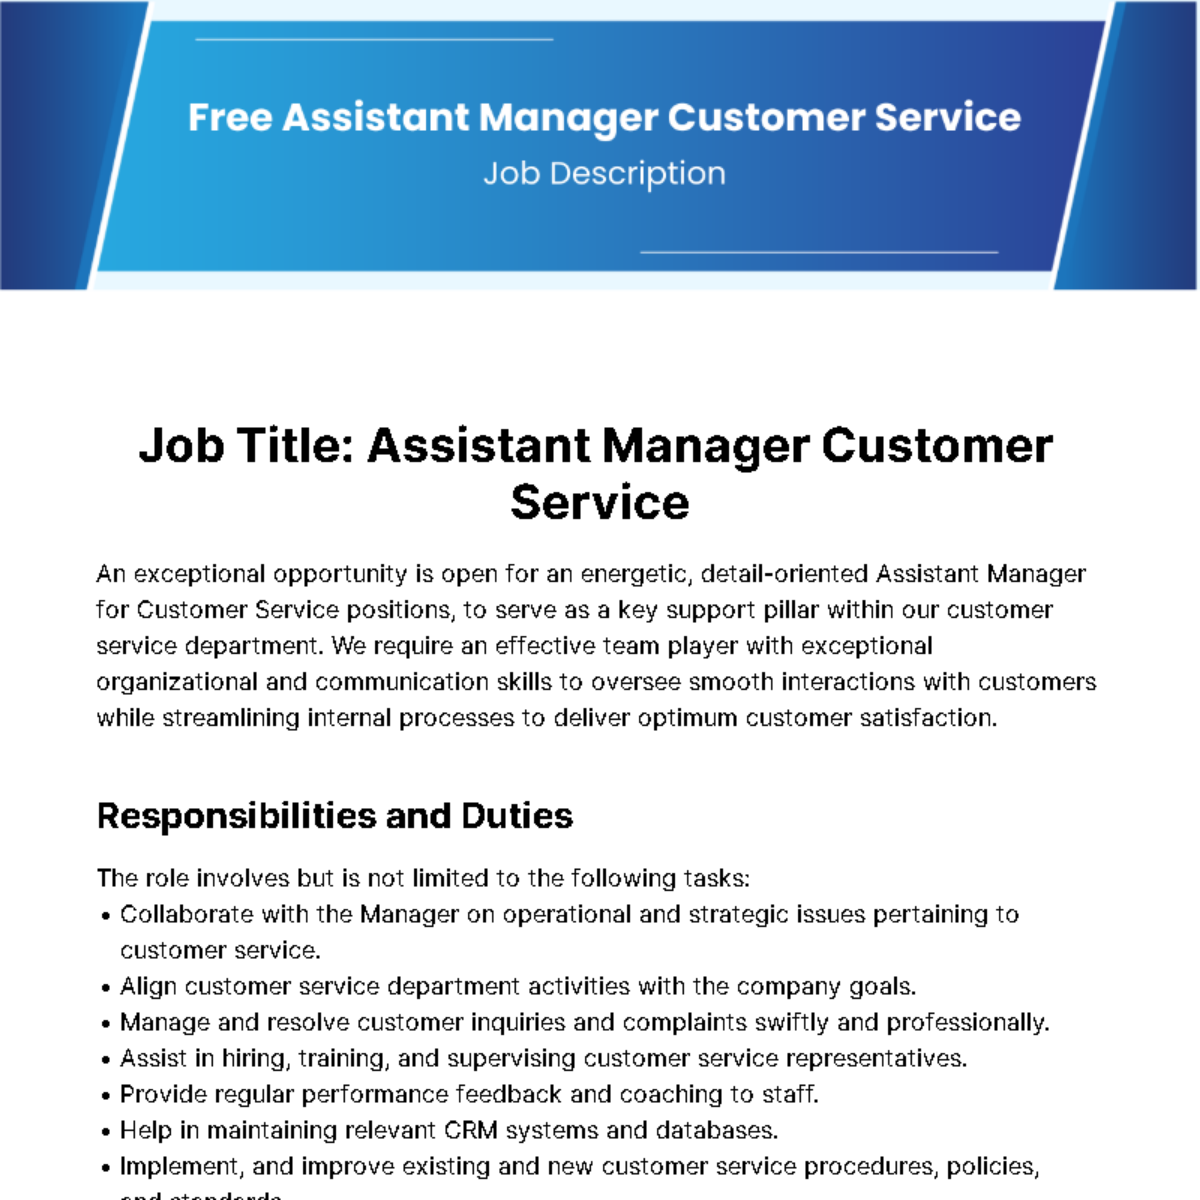 Assistant Manager Customer Service Job Description Template